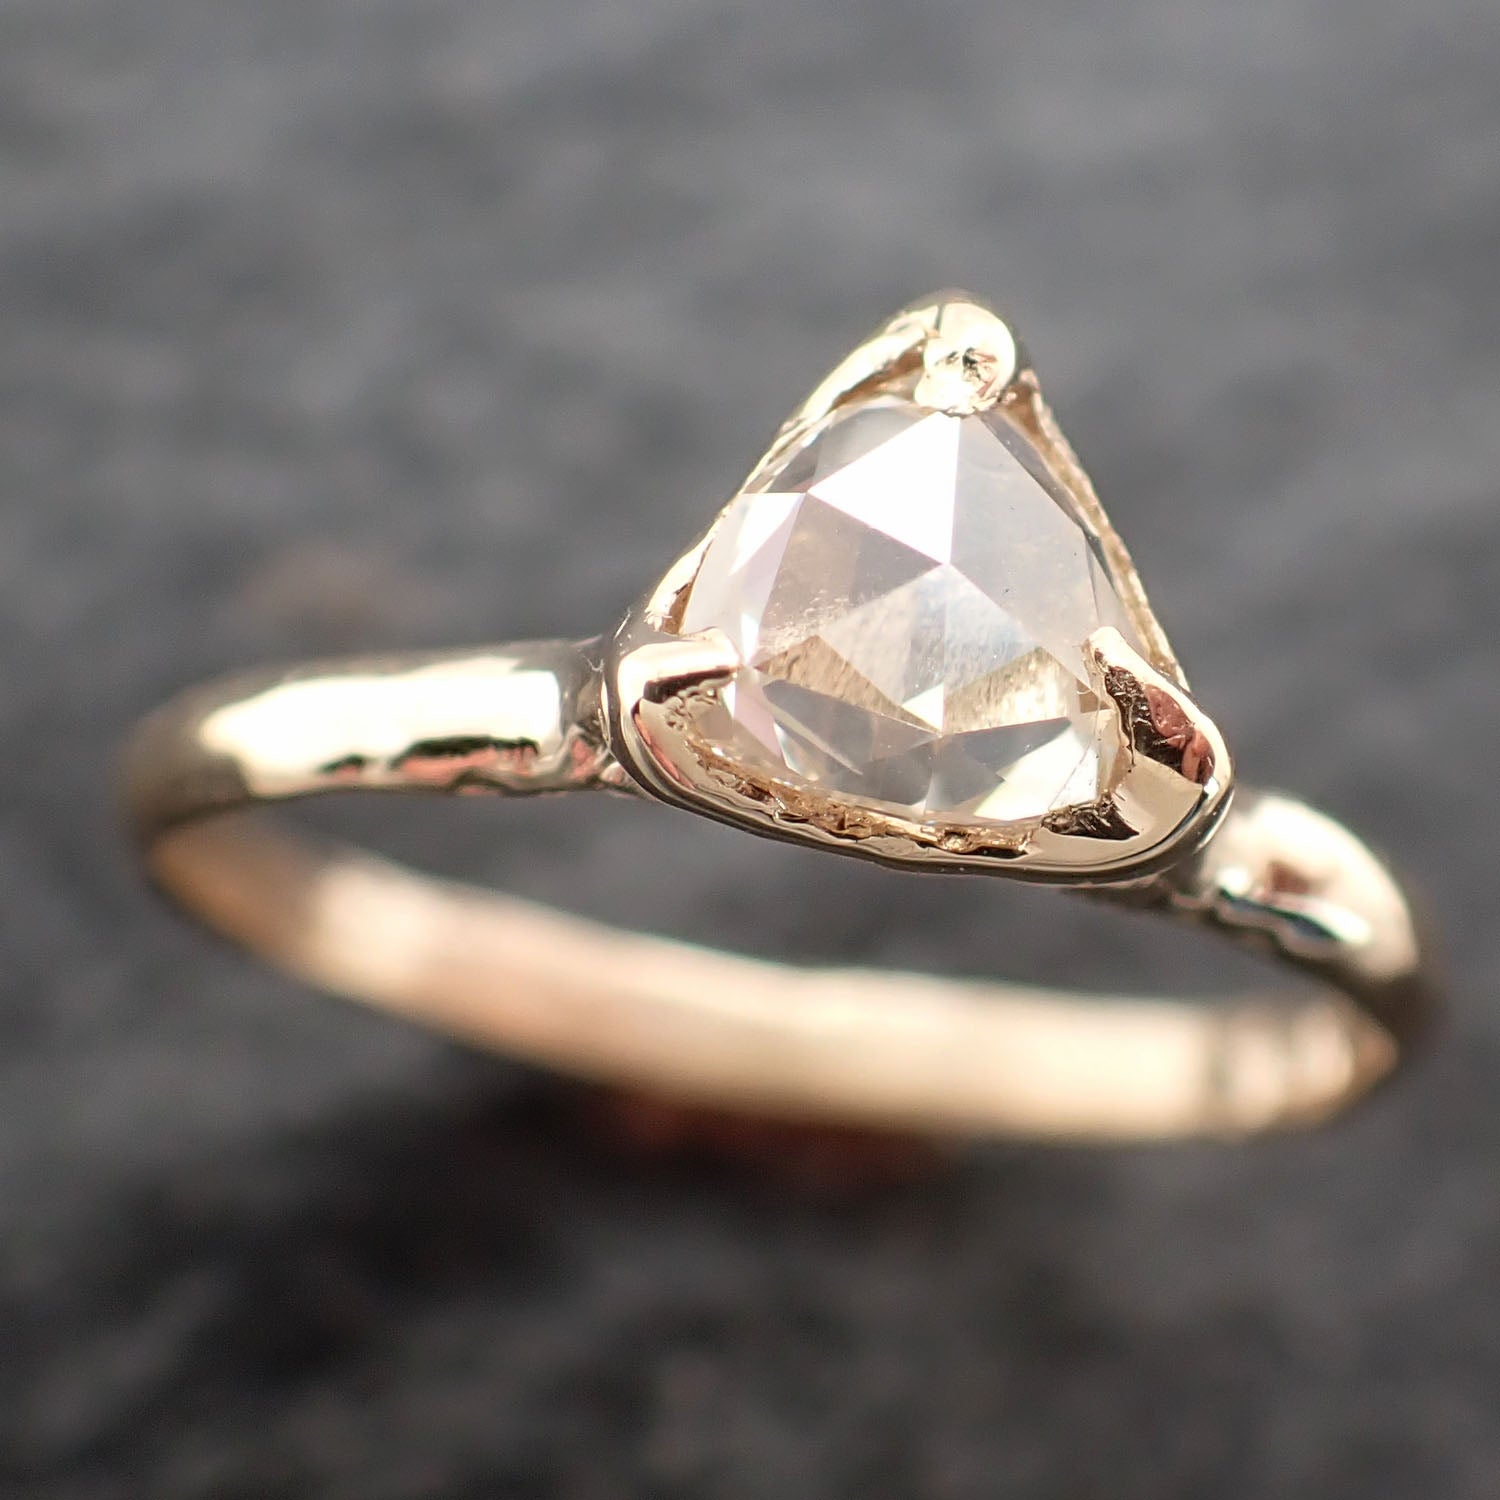 Fancy cut white Diamond Solitaire Engagement 14k yellow Gold Wedding Ring byAngeline 2601